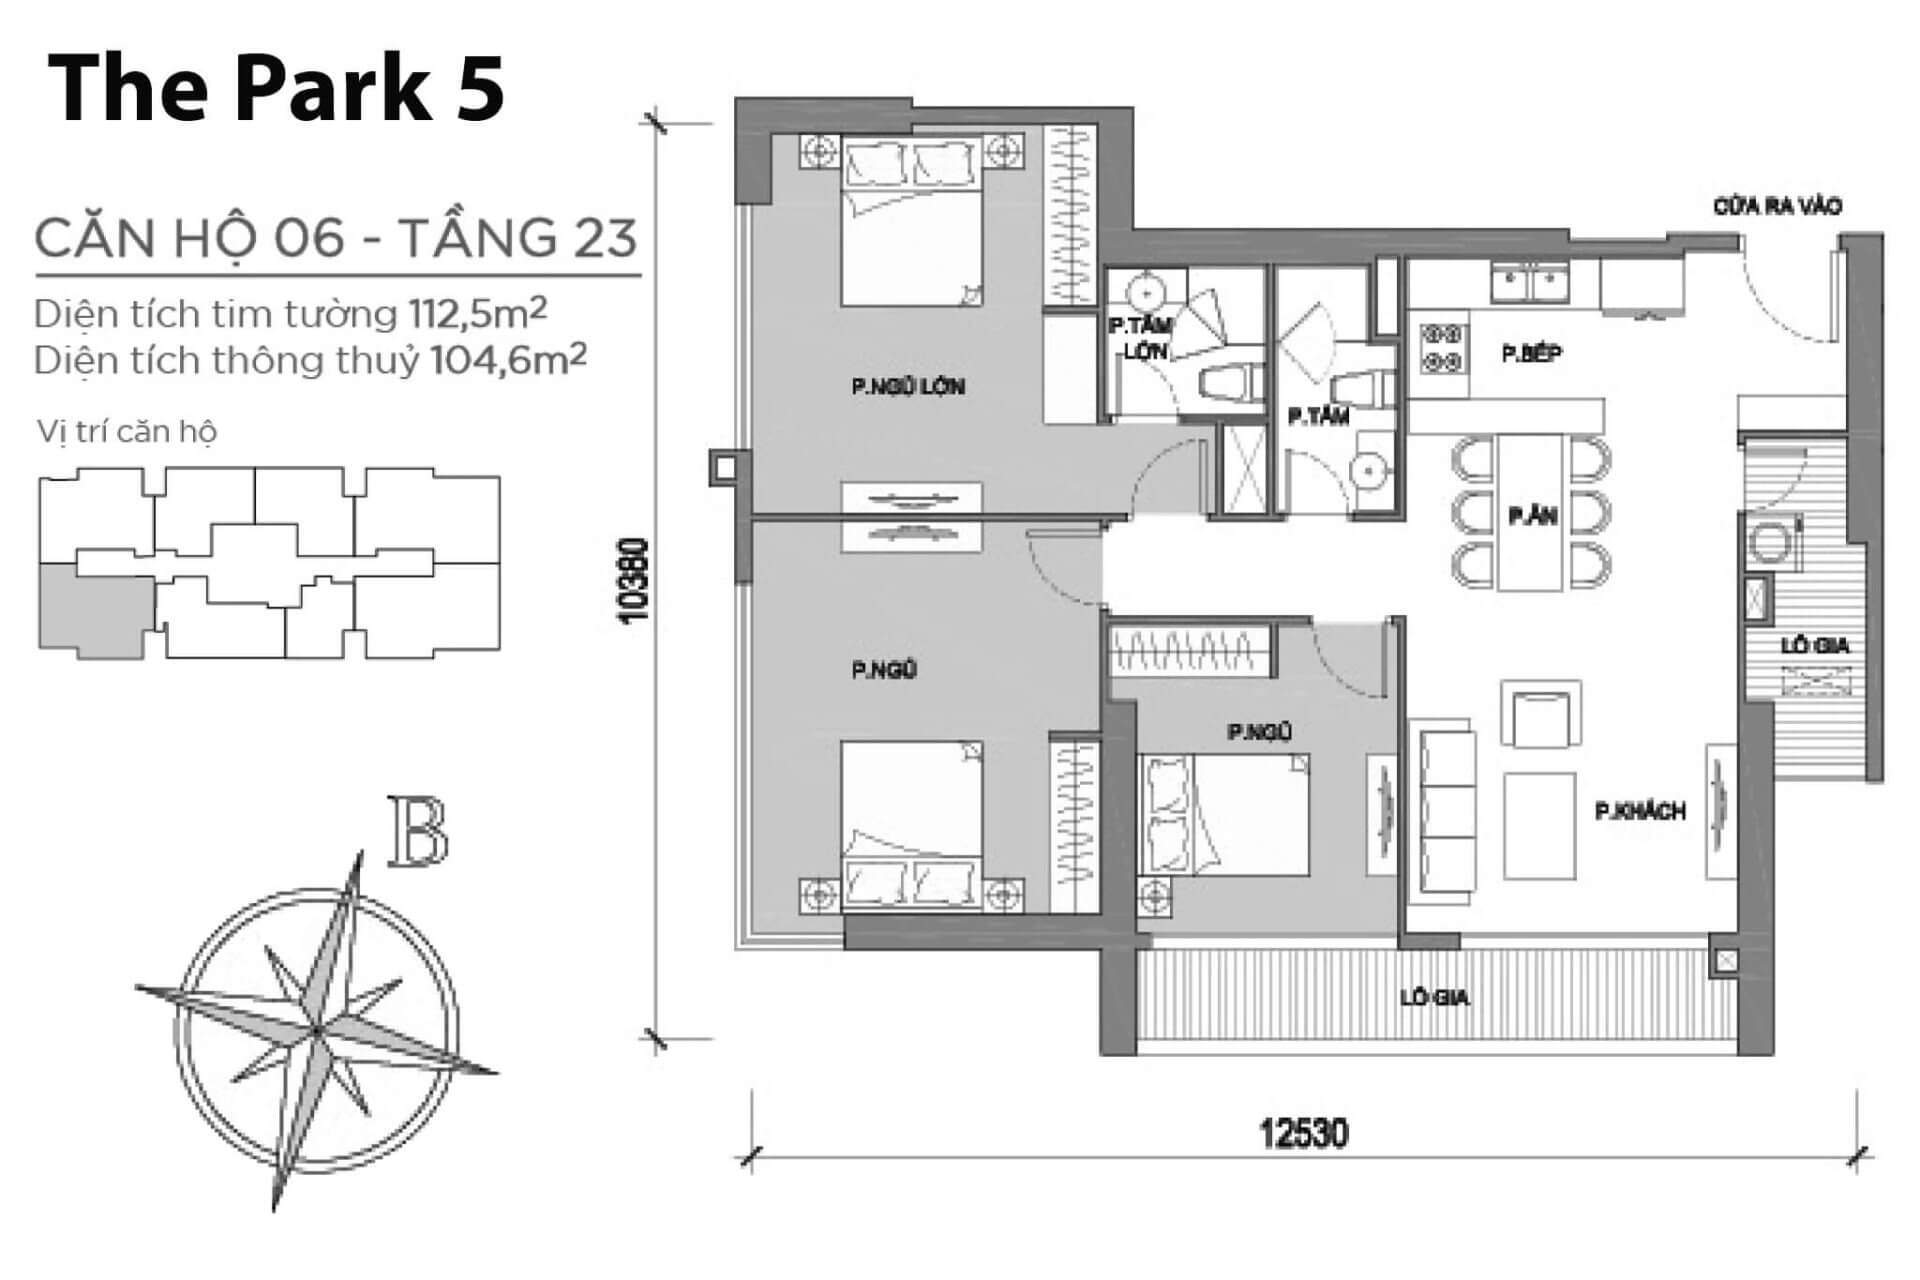 mặt bằng layout Park 5 căn hộ số 06 tầng 23 Vinhomes Central Park